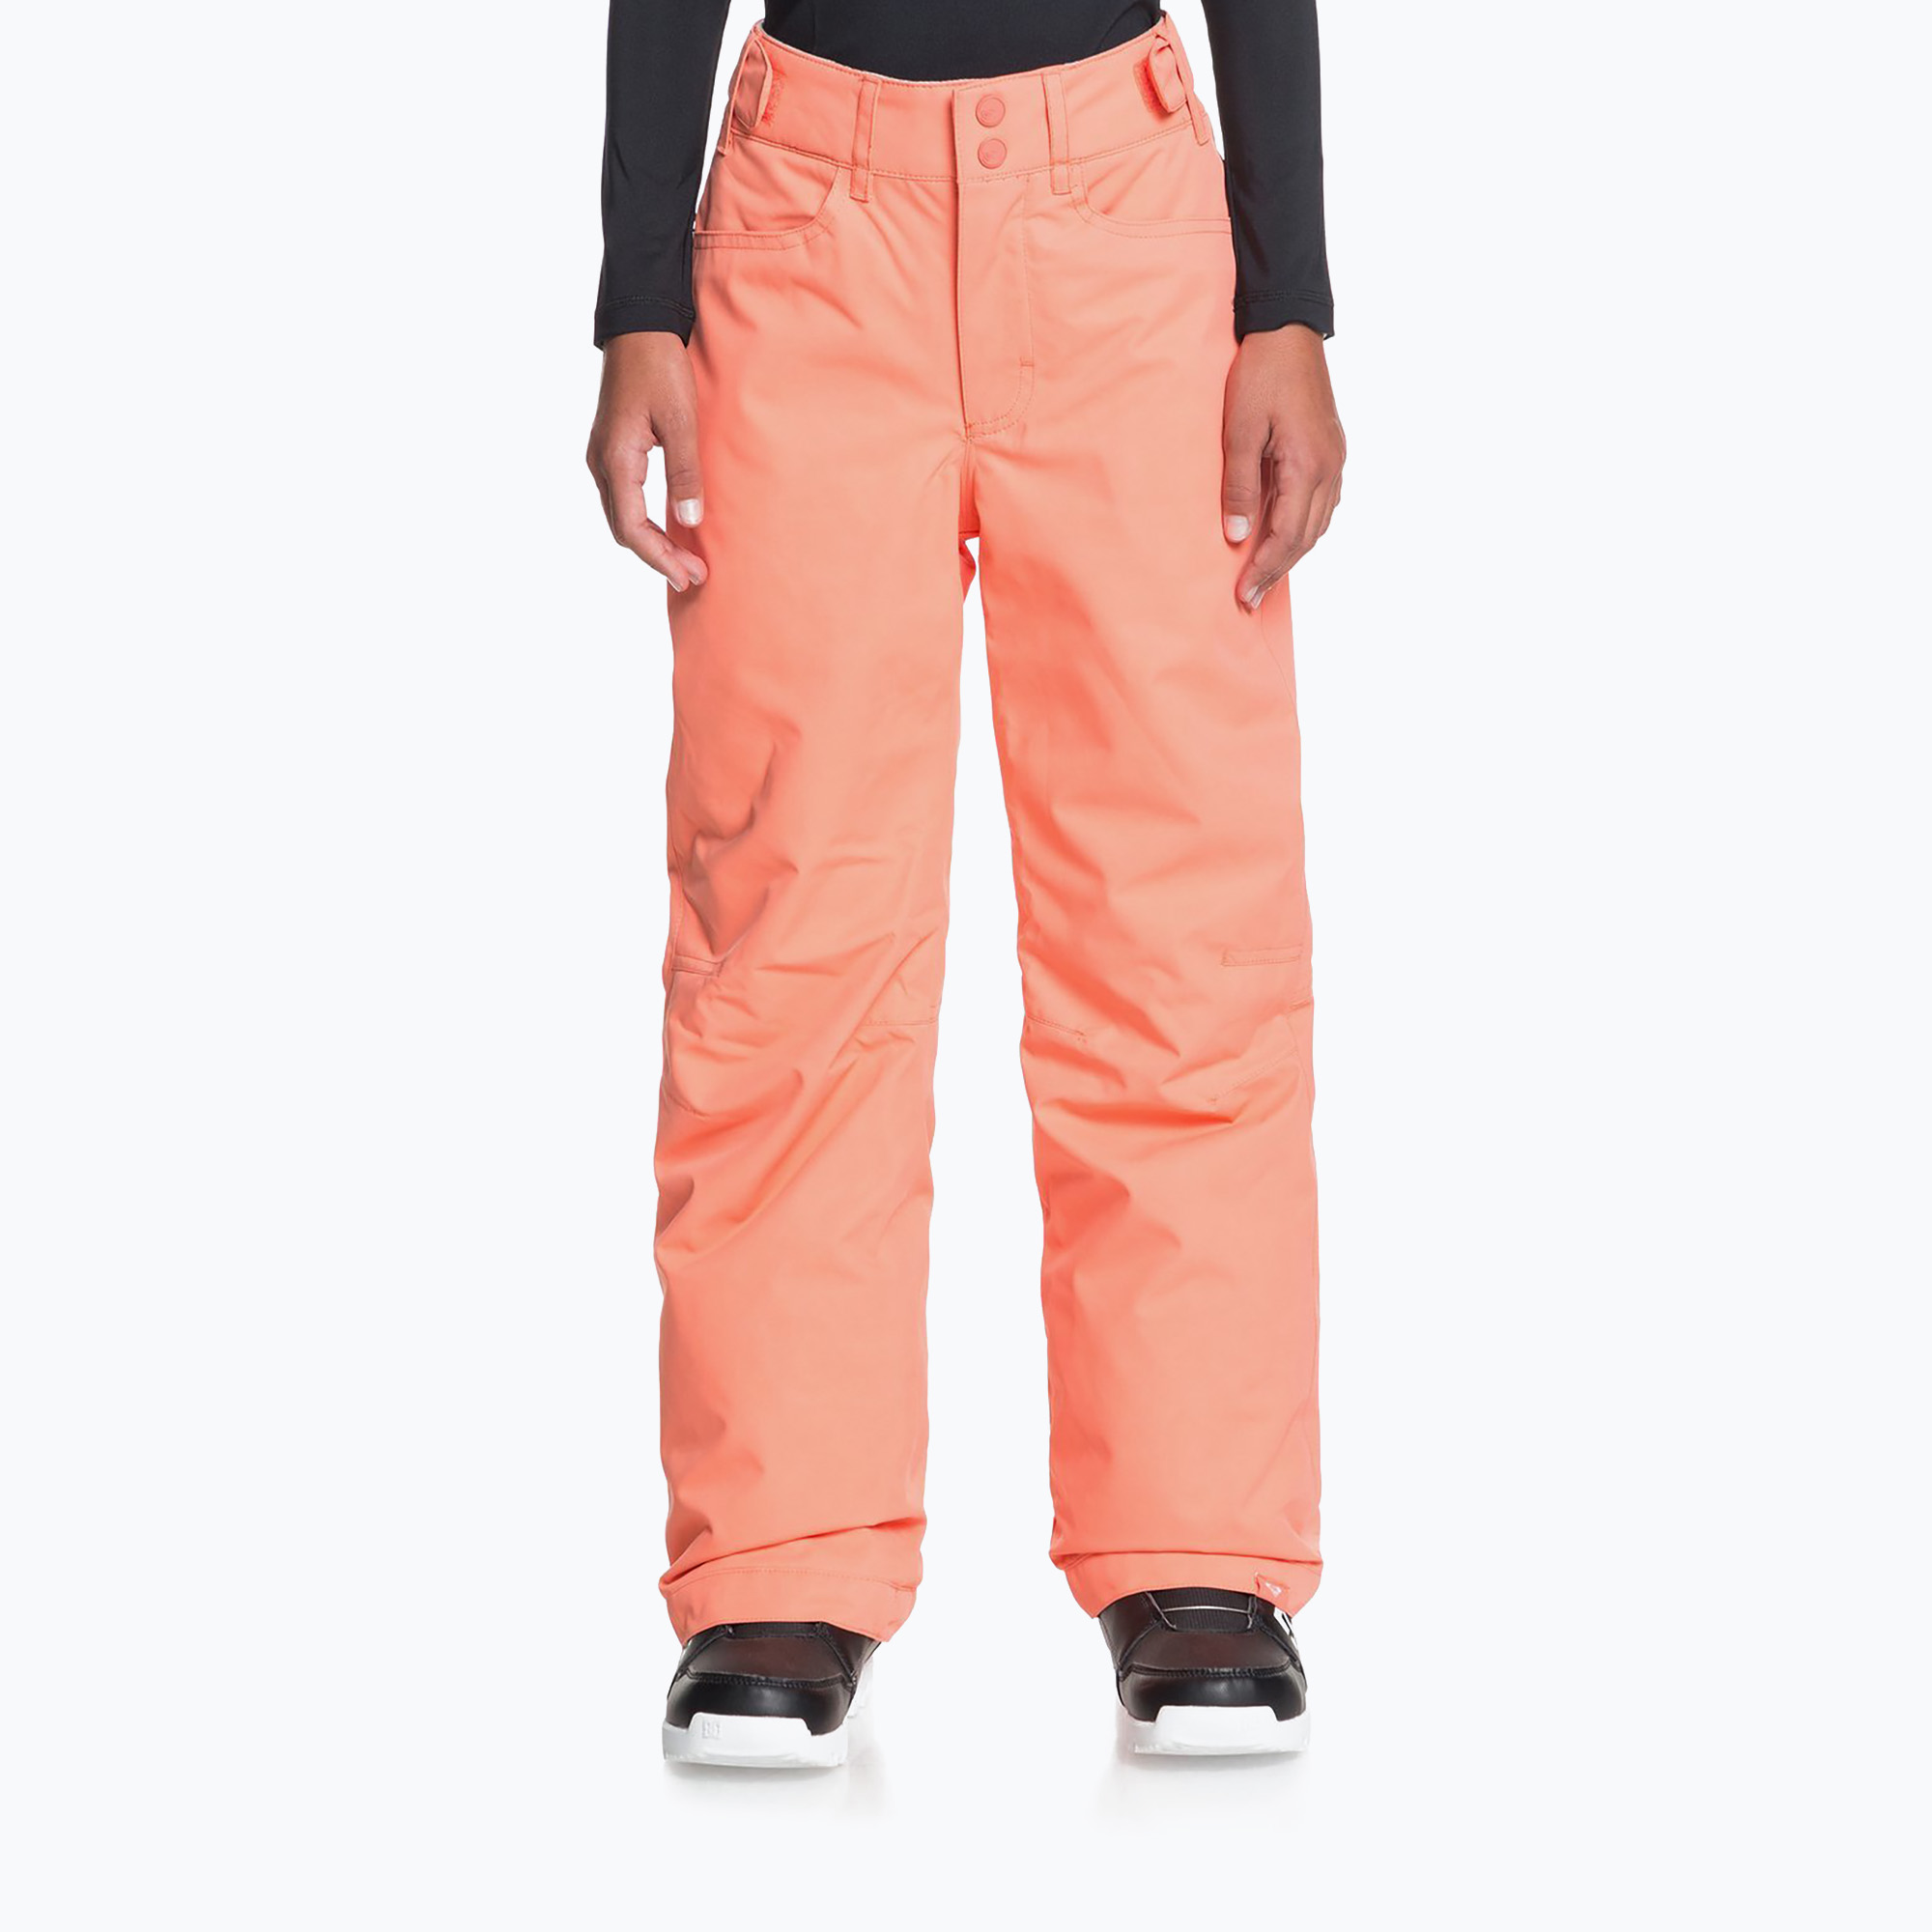 Pantaloni de snowboard pentru copii ROXY Backyard Girl 2021 fusion coral